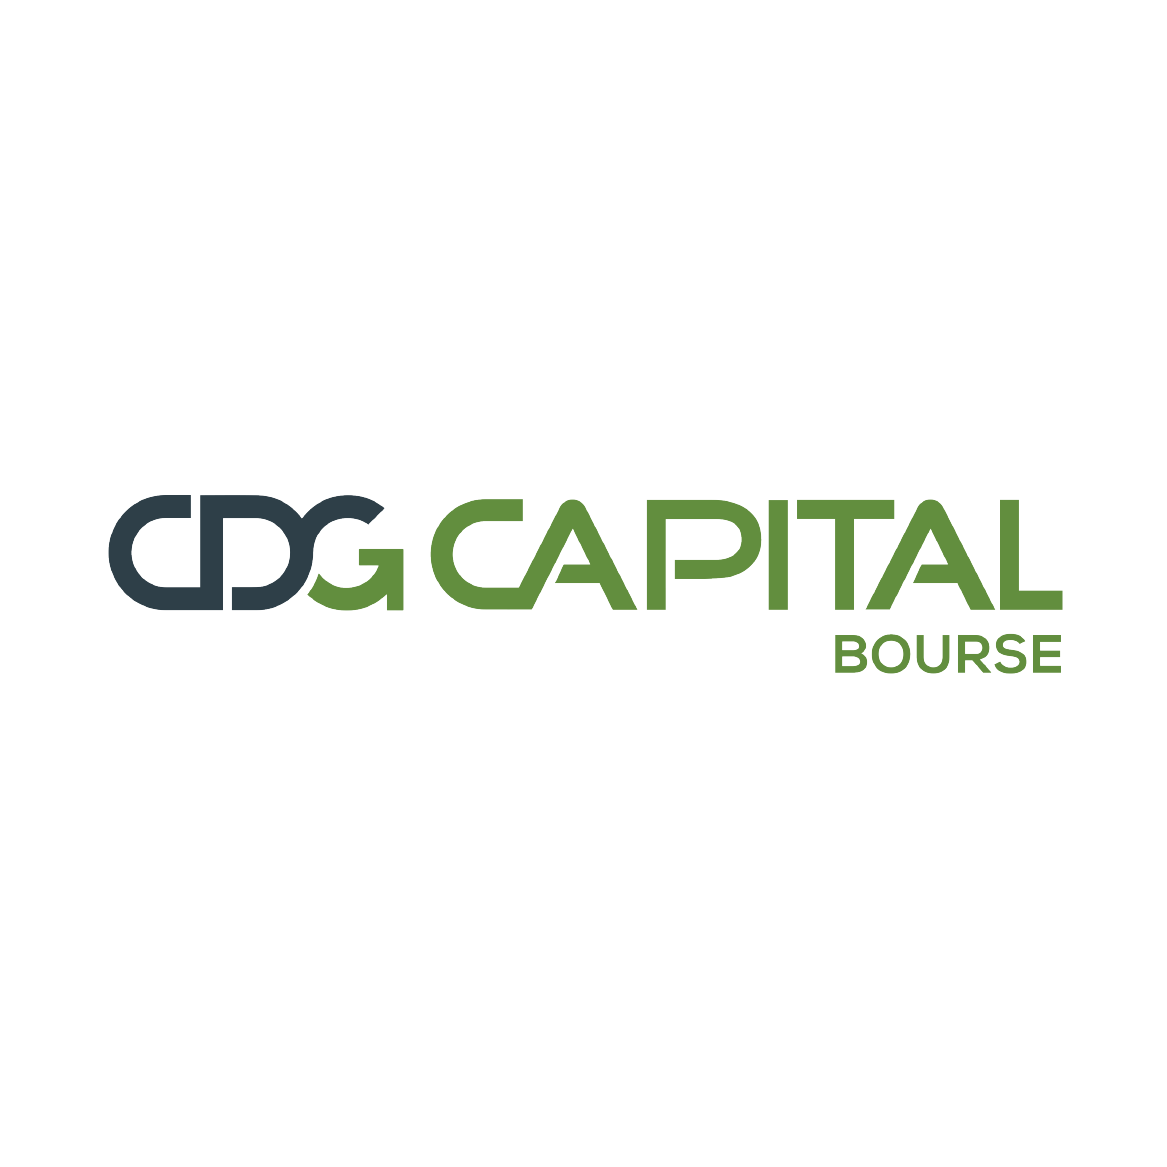 cdg capital bourse